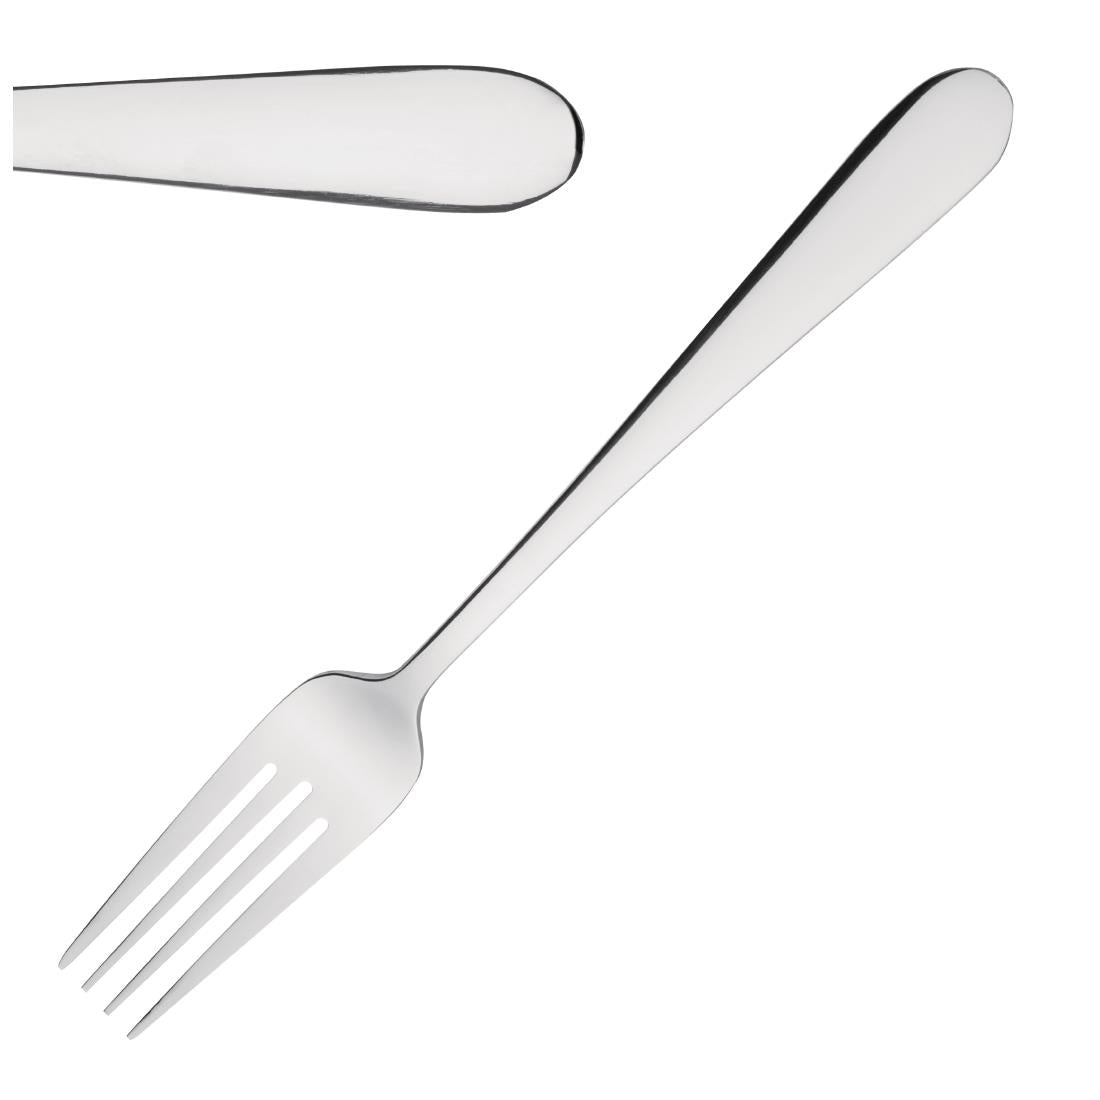 U877 Olympia Buckingham Table Fork (Pack of 12)